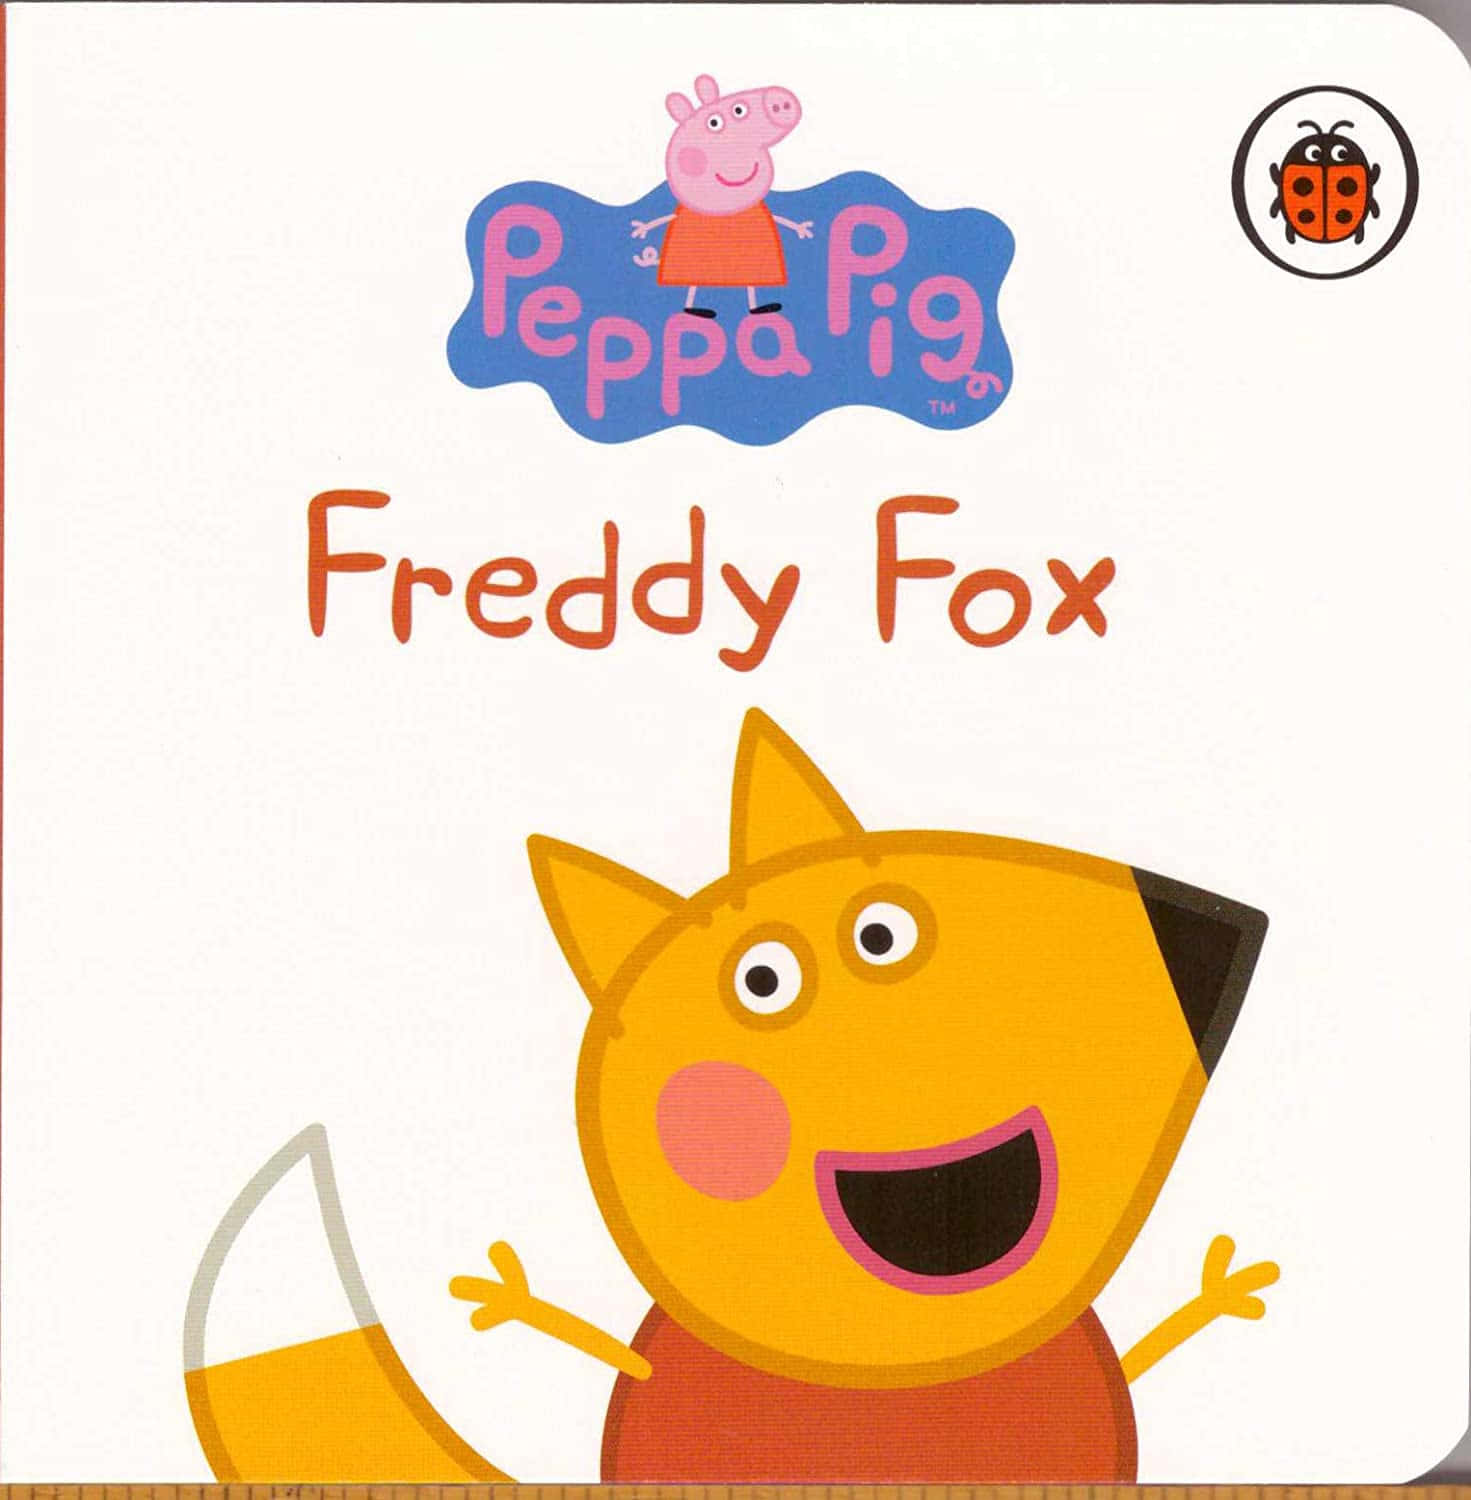 Freddy Fox with a friendly smile Wallpaper